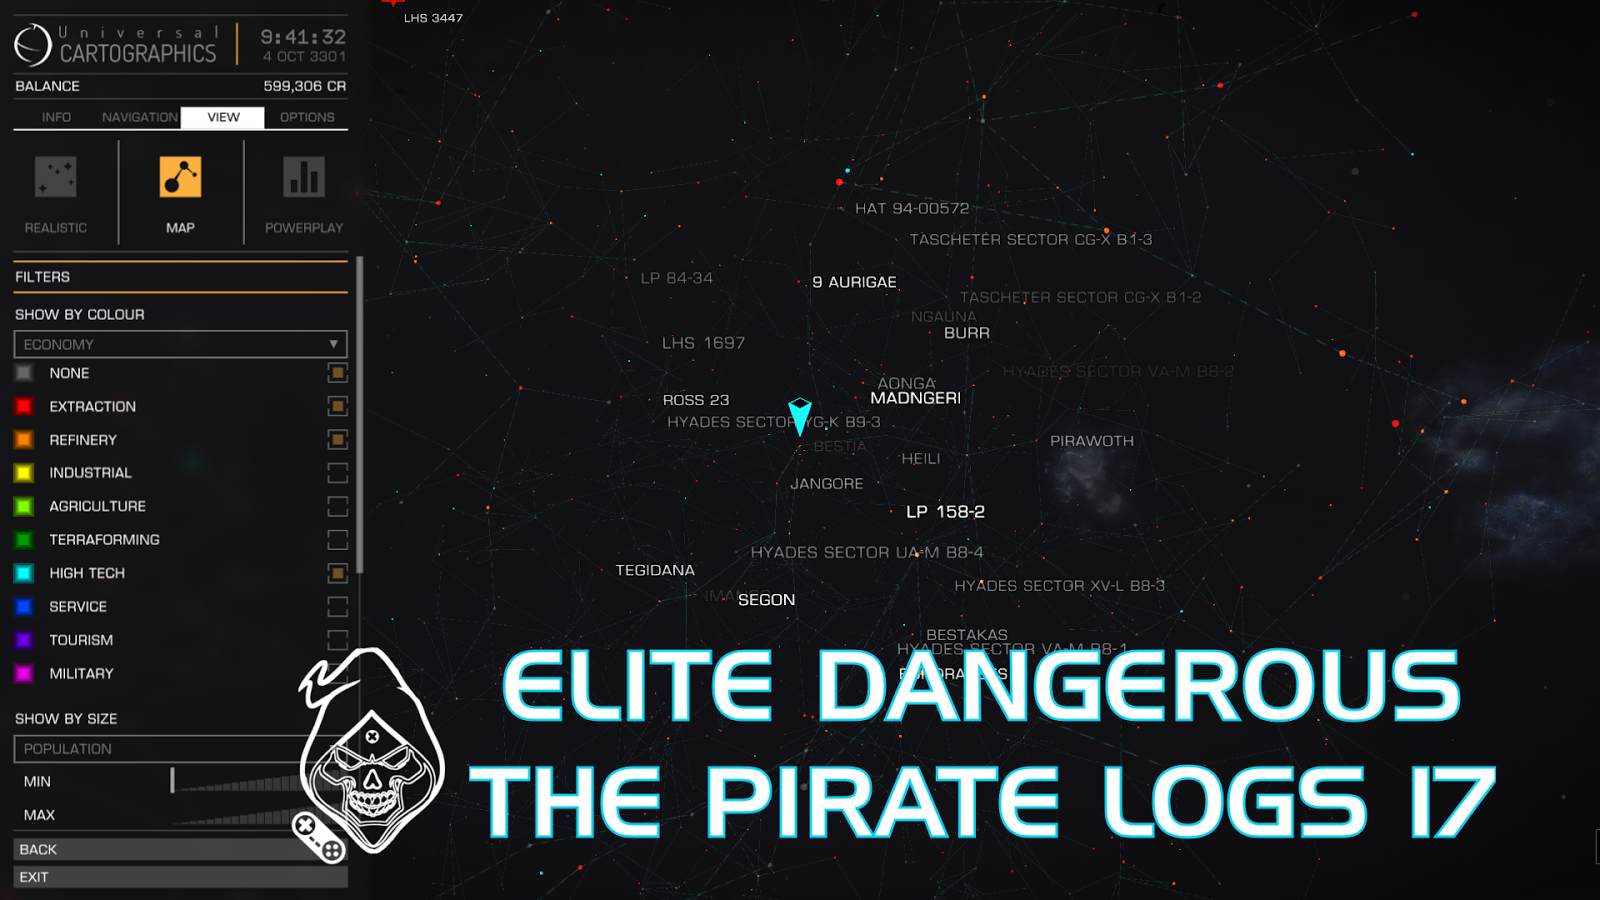 Код элиты. Elite Dangerous Pirates. Элит денджерос шпаргалка. Elite Dangerous LHS 411 A 5. Universal cartographics Elite Dangerous logo.